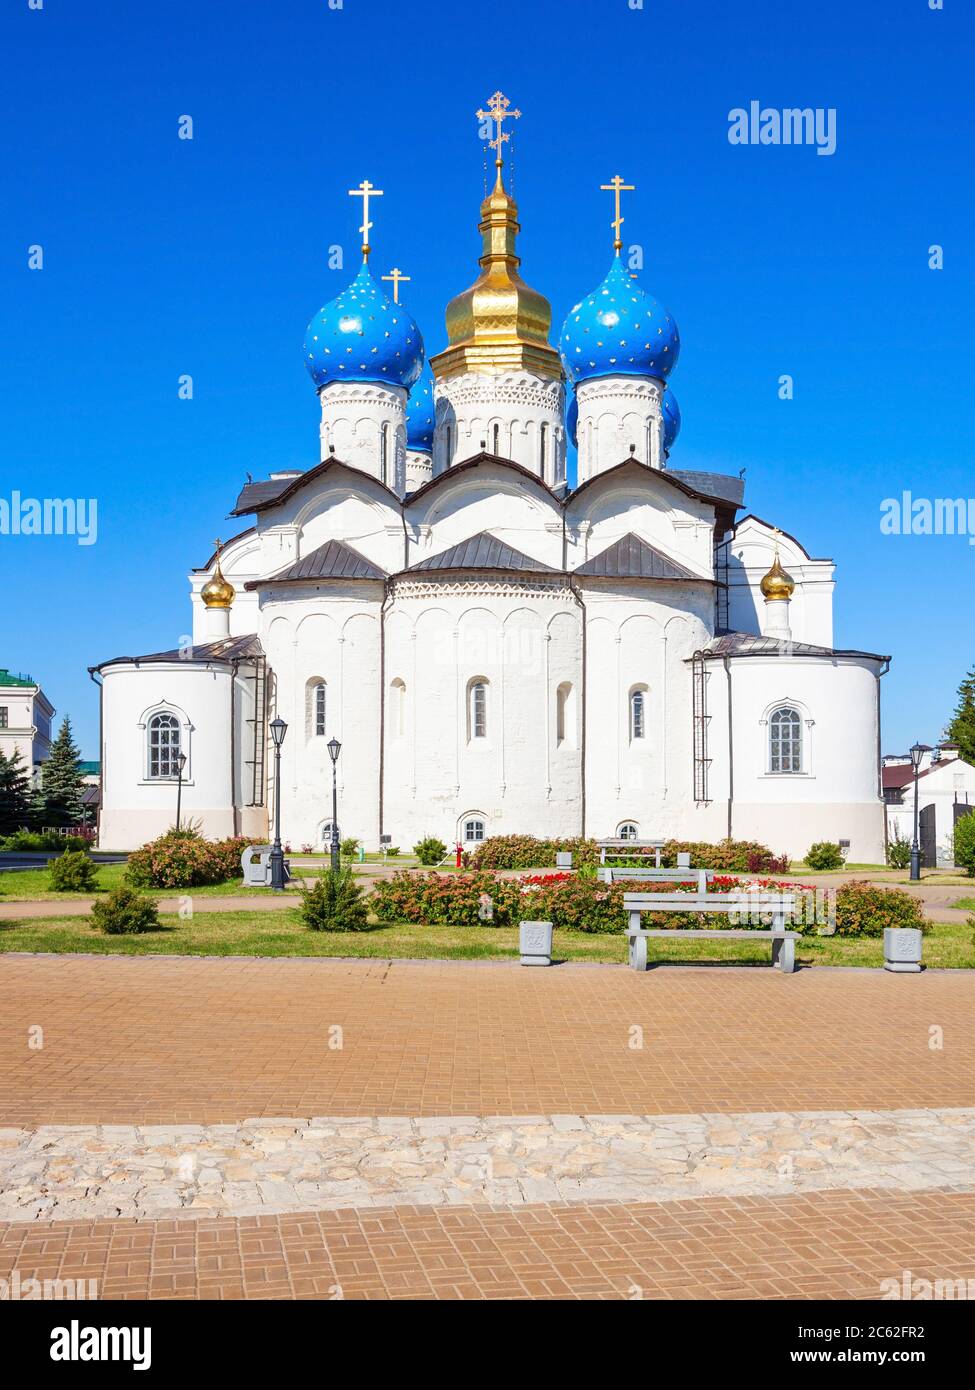 Annunciation Cathedral of Kazan Kremlin is the first Orthodox church of the Kazan Kremlin. The Kazan Kremlin is the chief historic citadel of Tatarsta Stock Photo